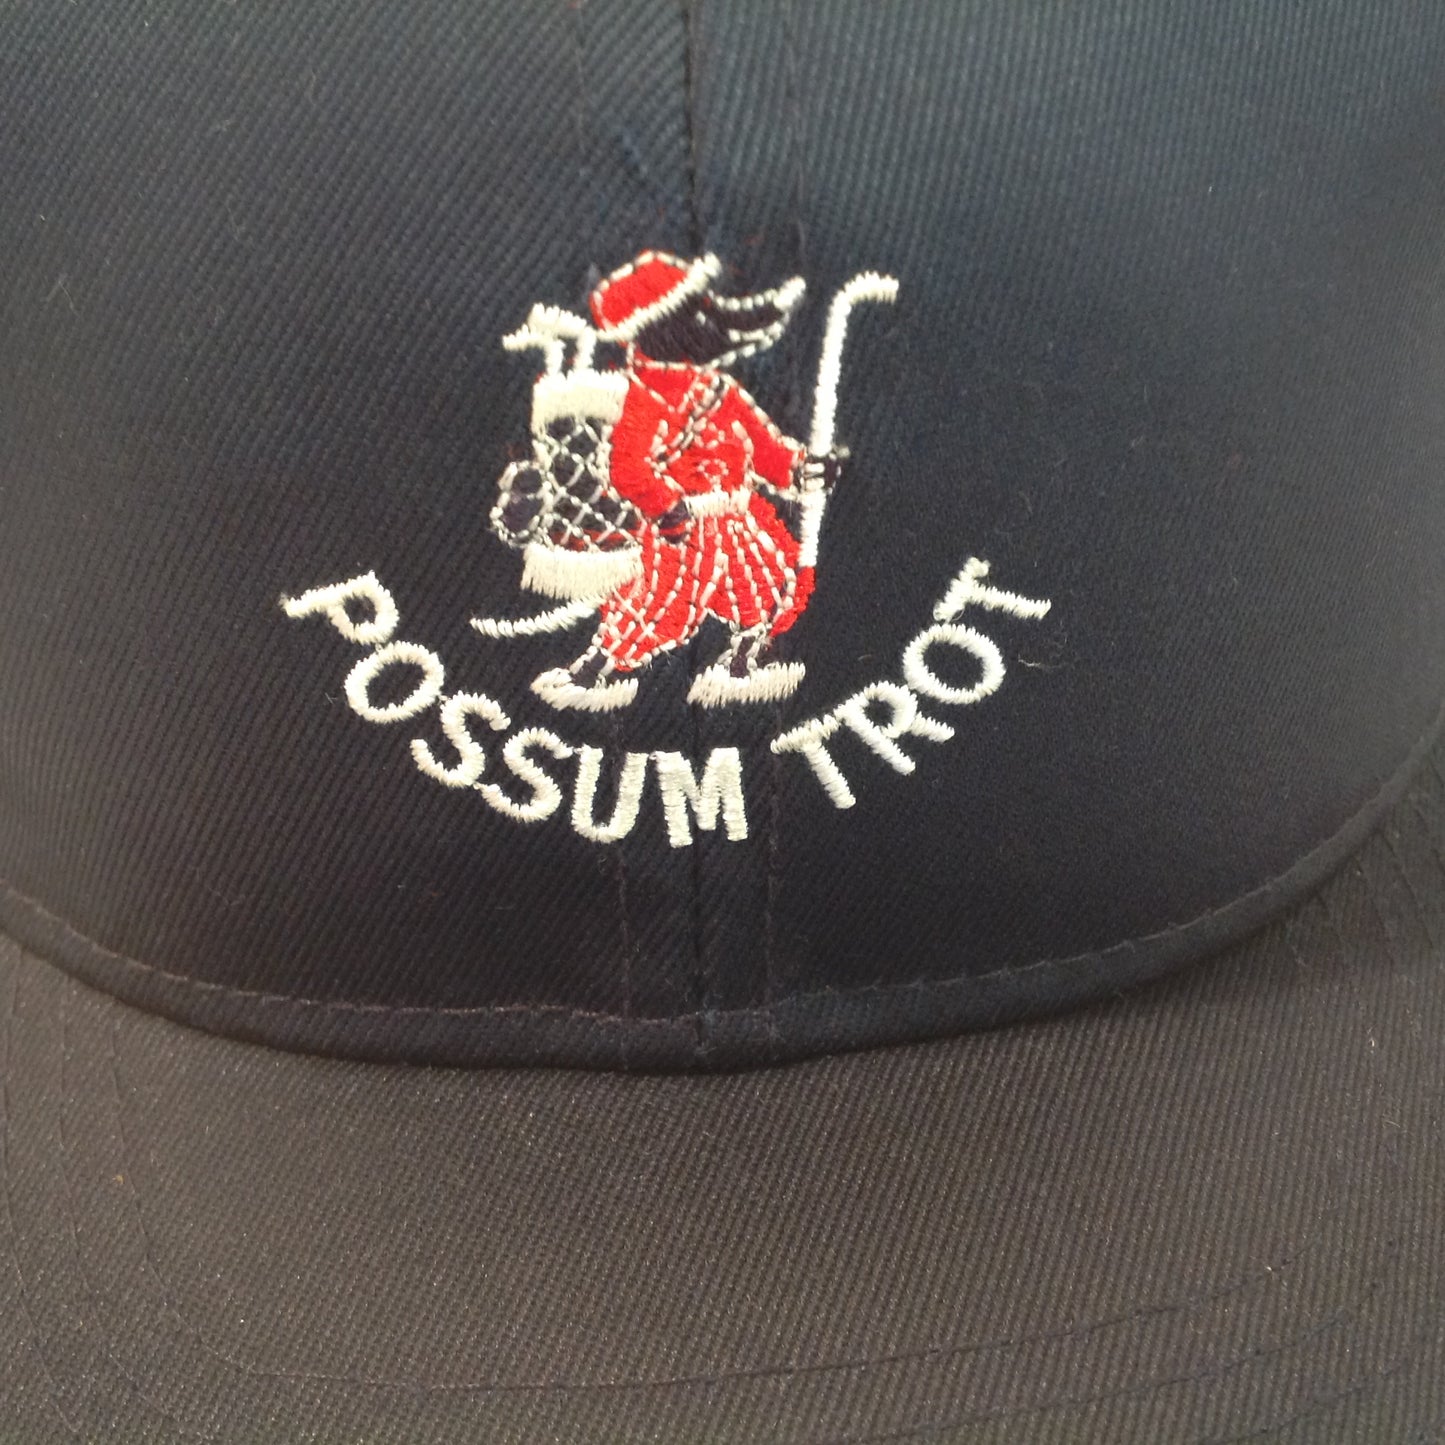 Vintage La Mode Active Headwear Possum Trot Golf Club North Myrtle Beach Golf Course Souvenir Navy Blue Baseball Cap